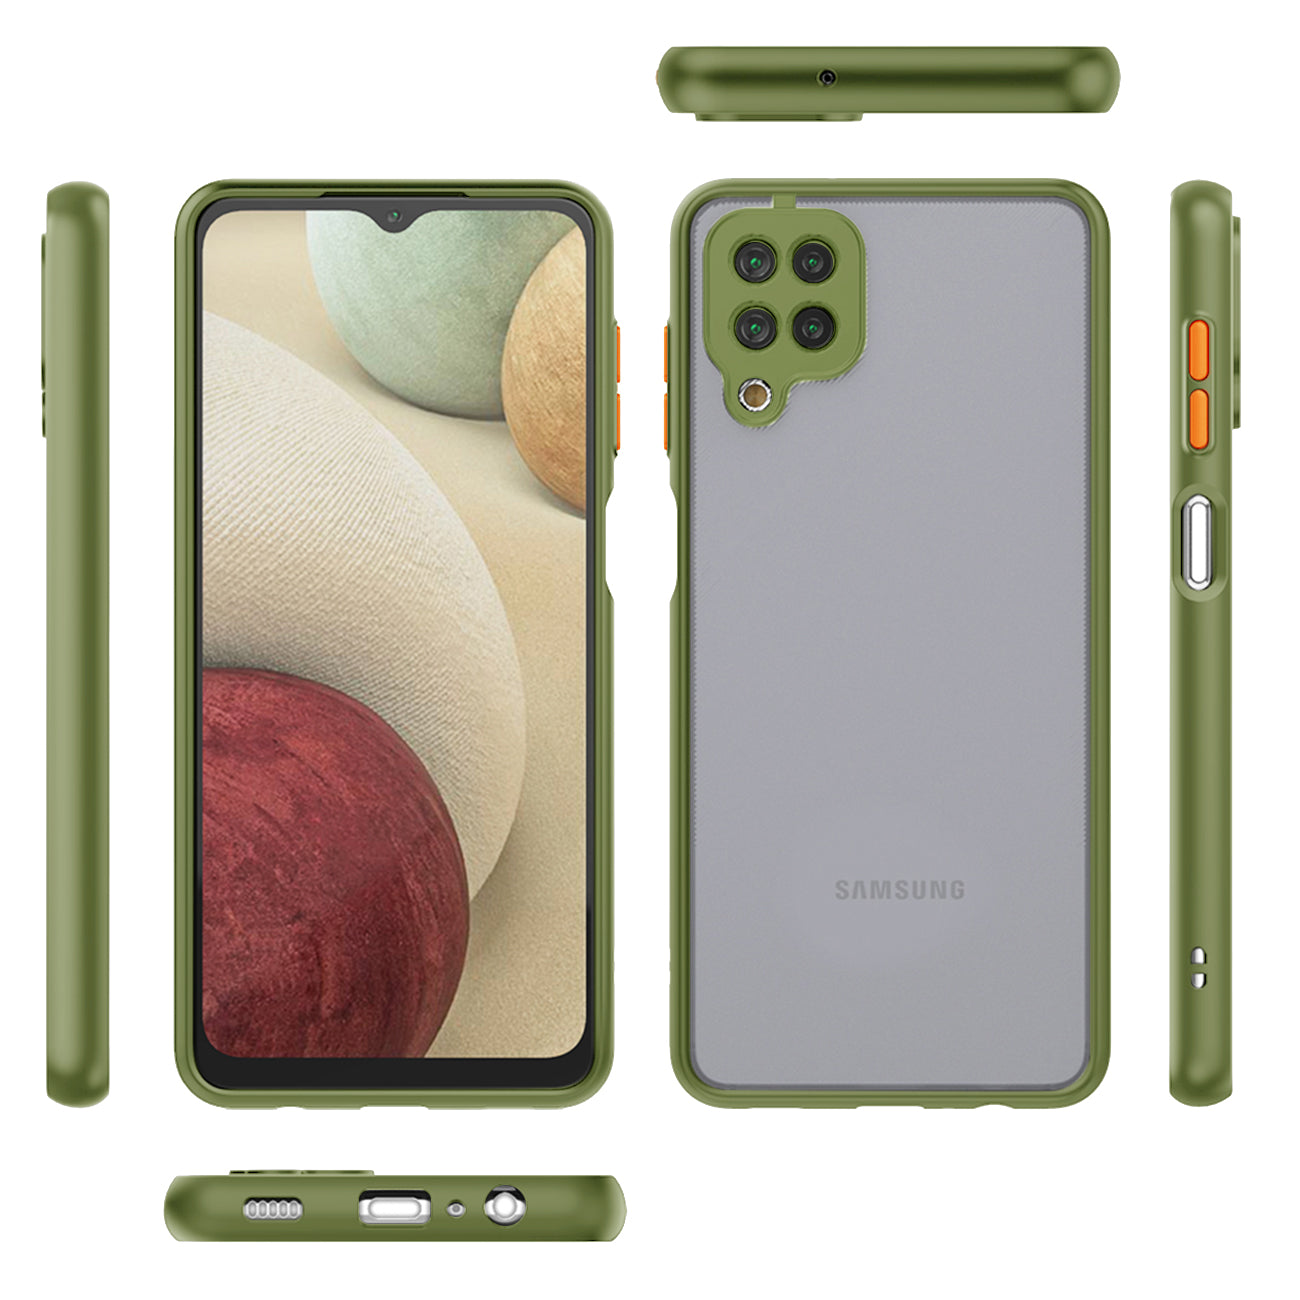 Case Camera Protection Translucent Samsung Galaxy A12 5G Light Green Color